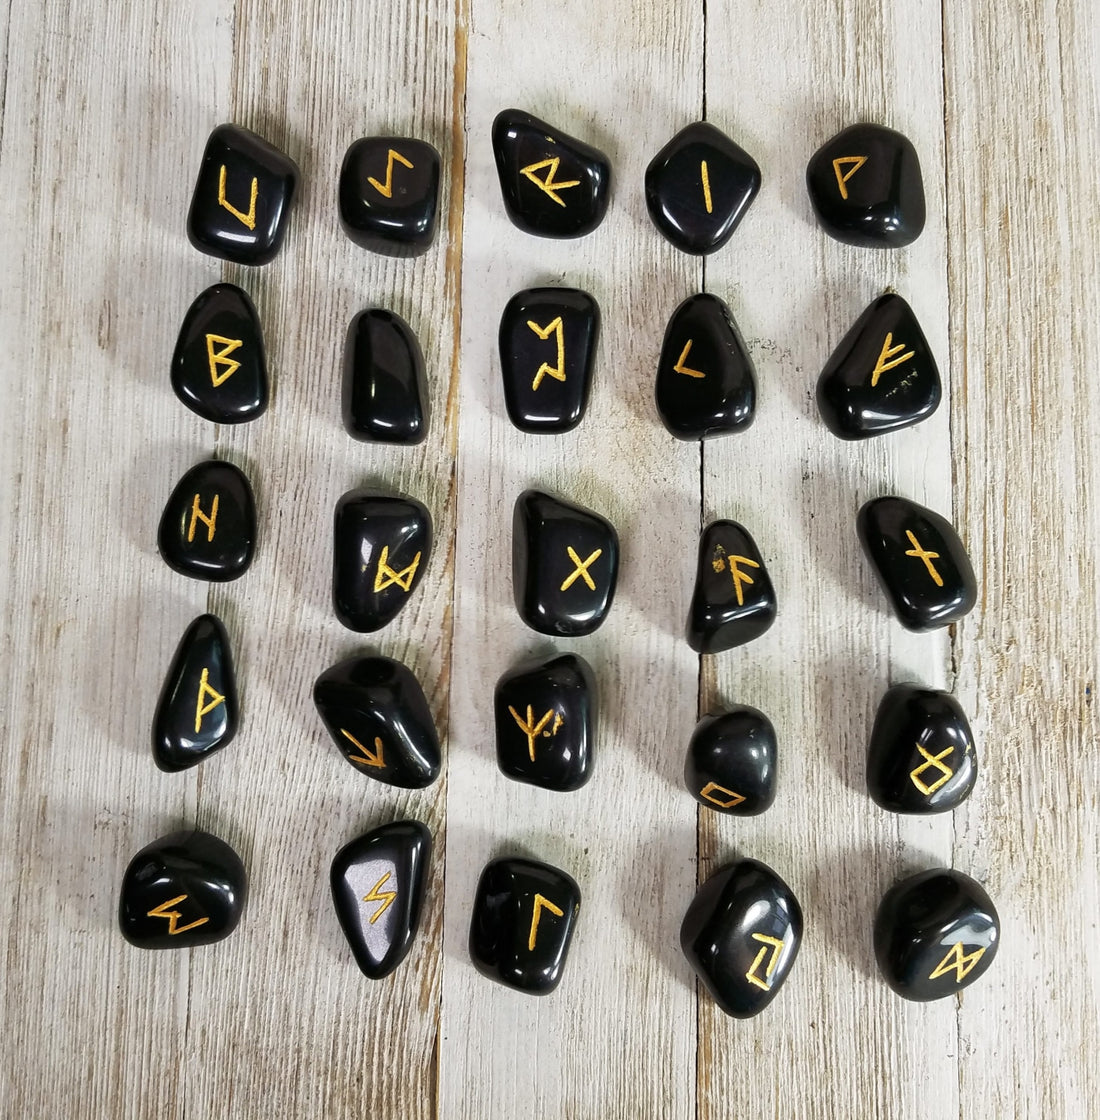 Black Agate Tumbled Gemstone Runes - Tool for Divination | Crystal Gemstone Shop.